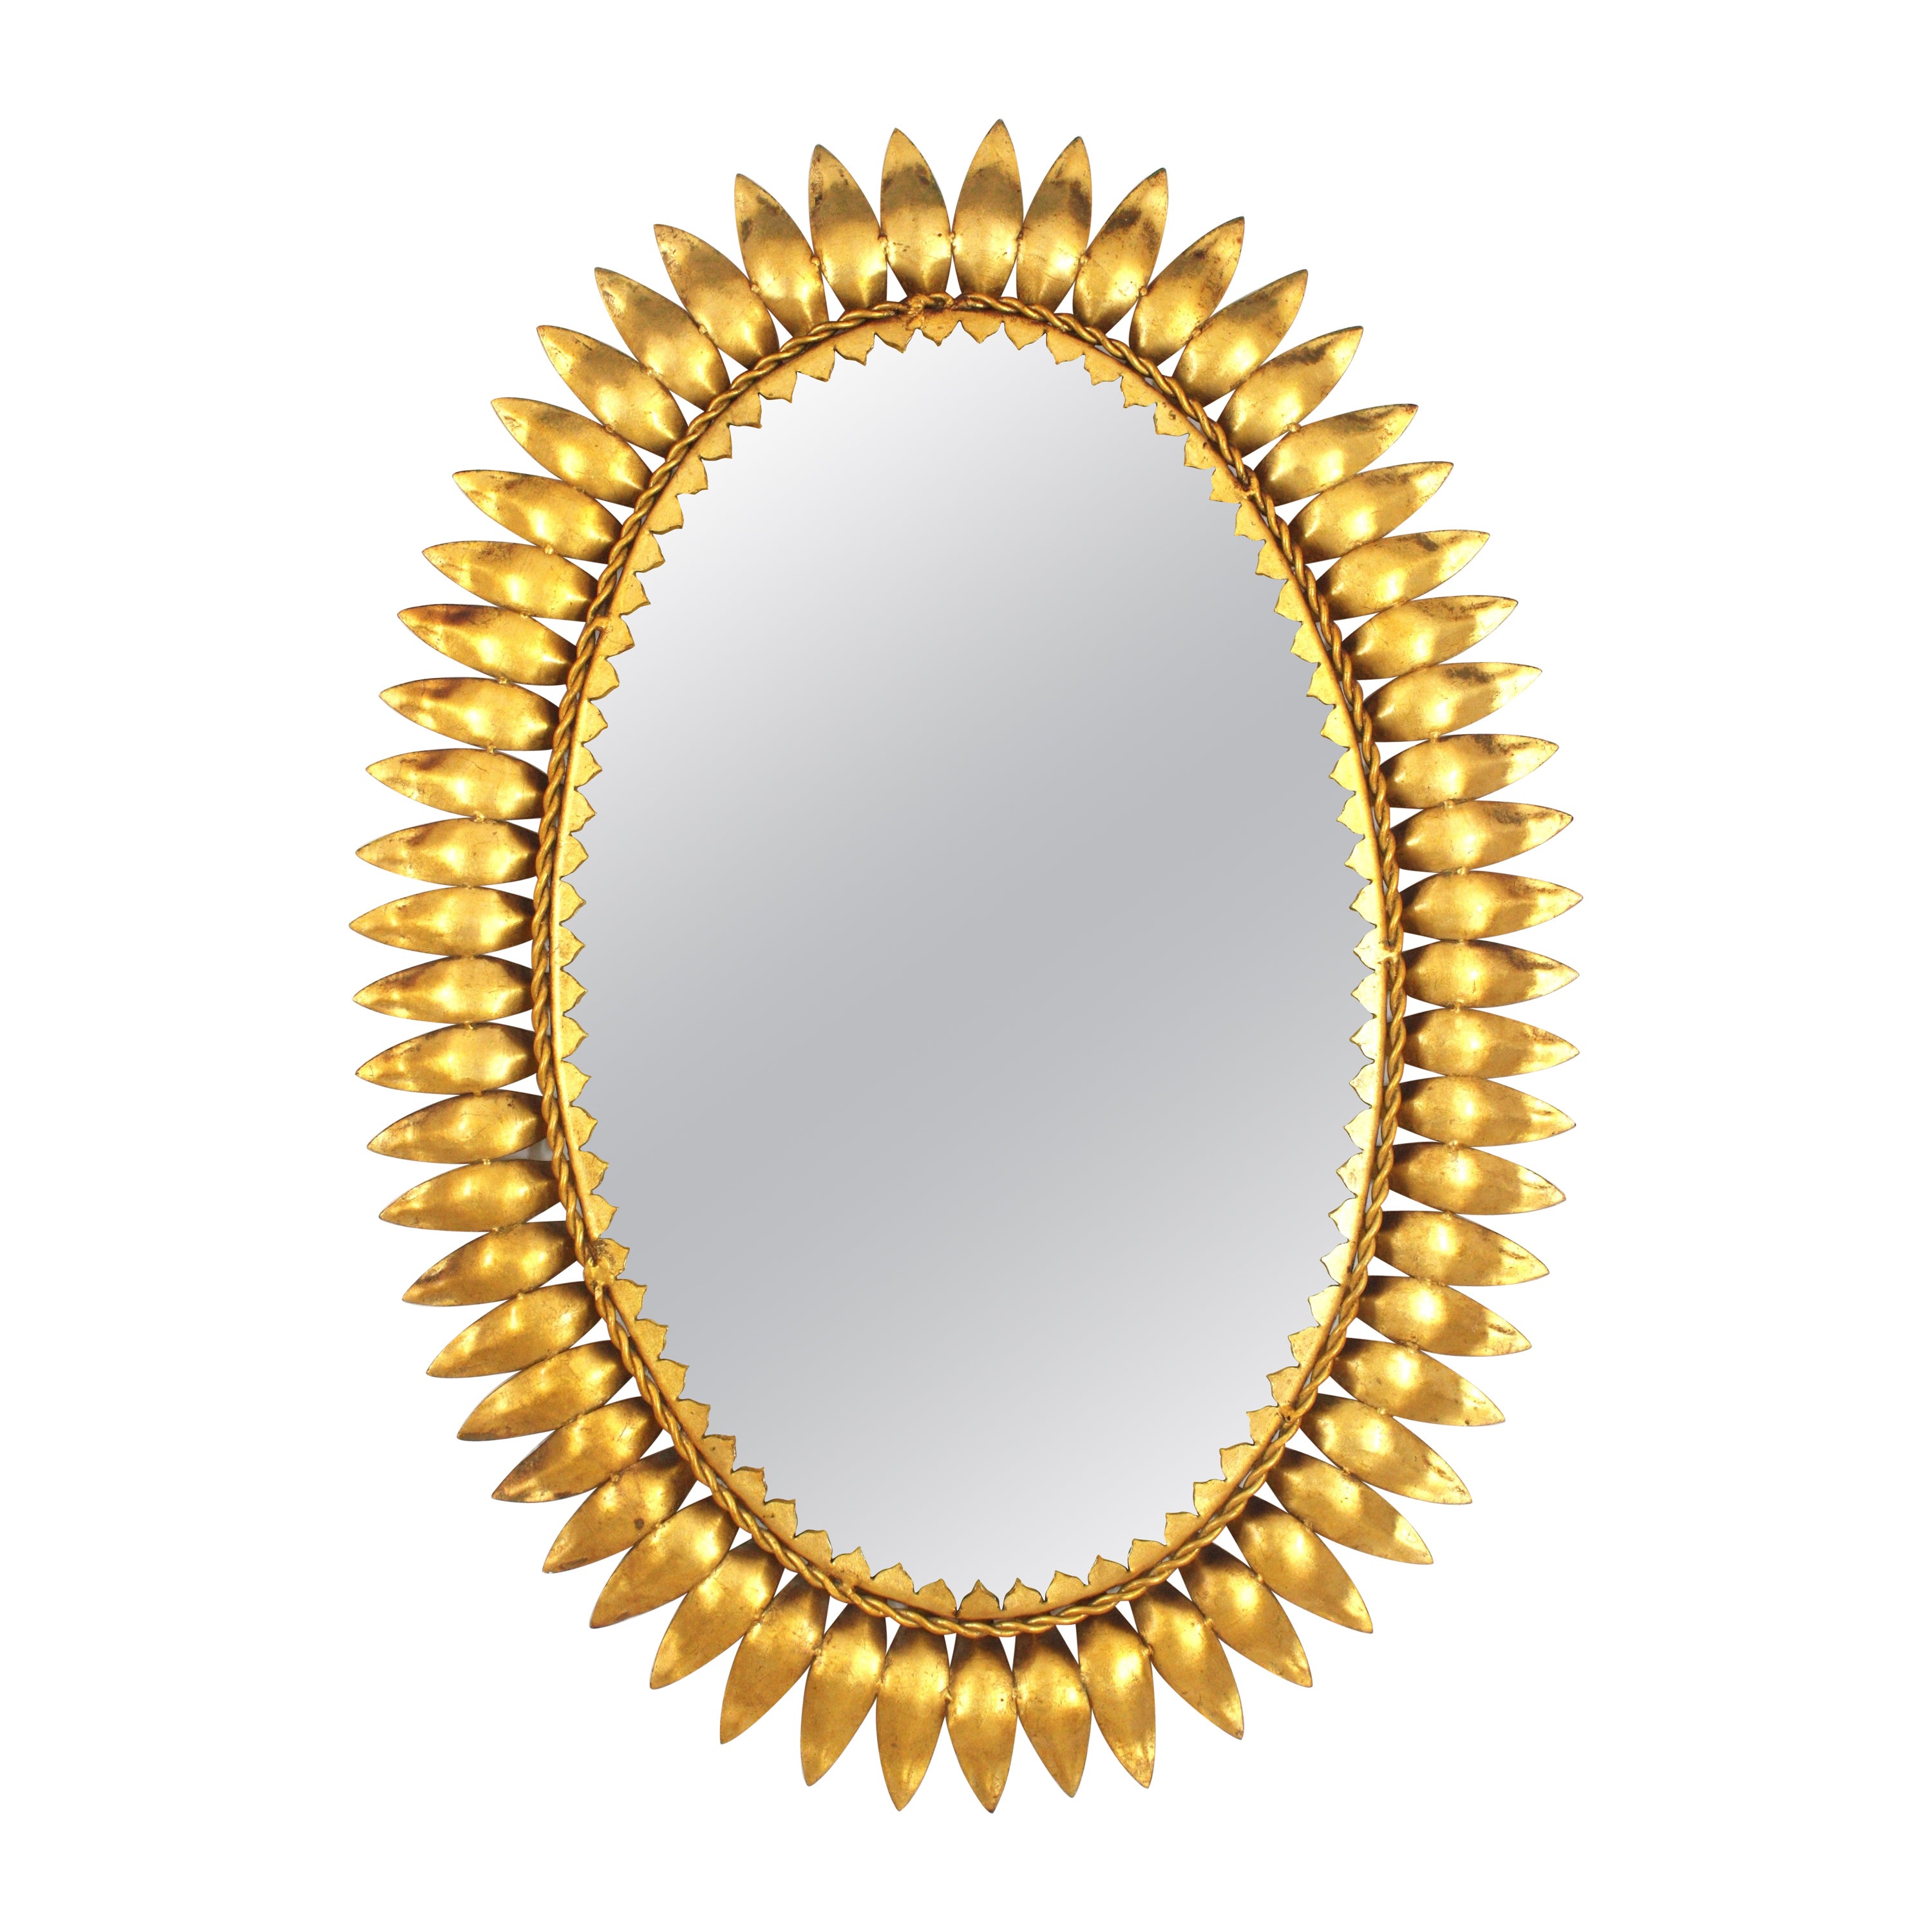 Sunburst Oval Mirror in Gilt Metal, Spain, 1950s For Sale